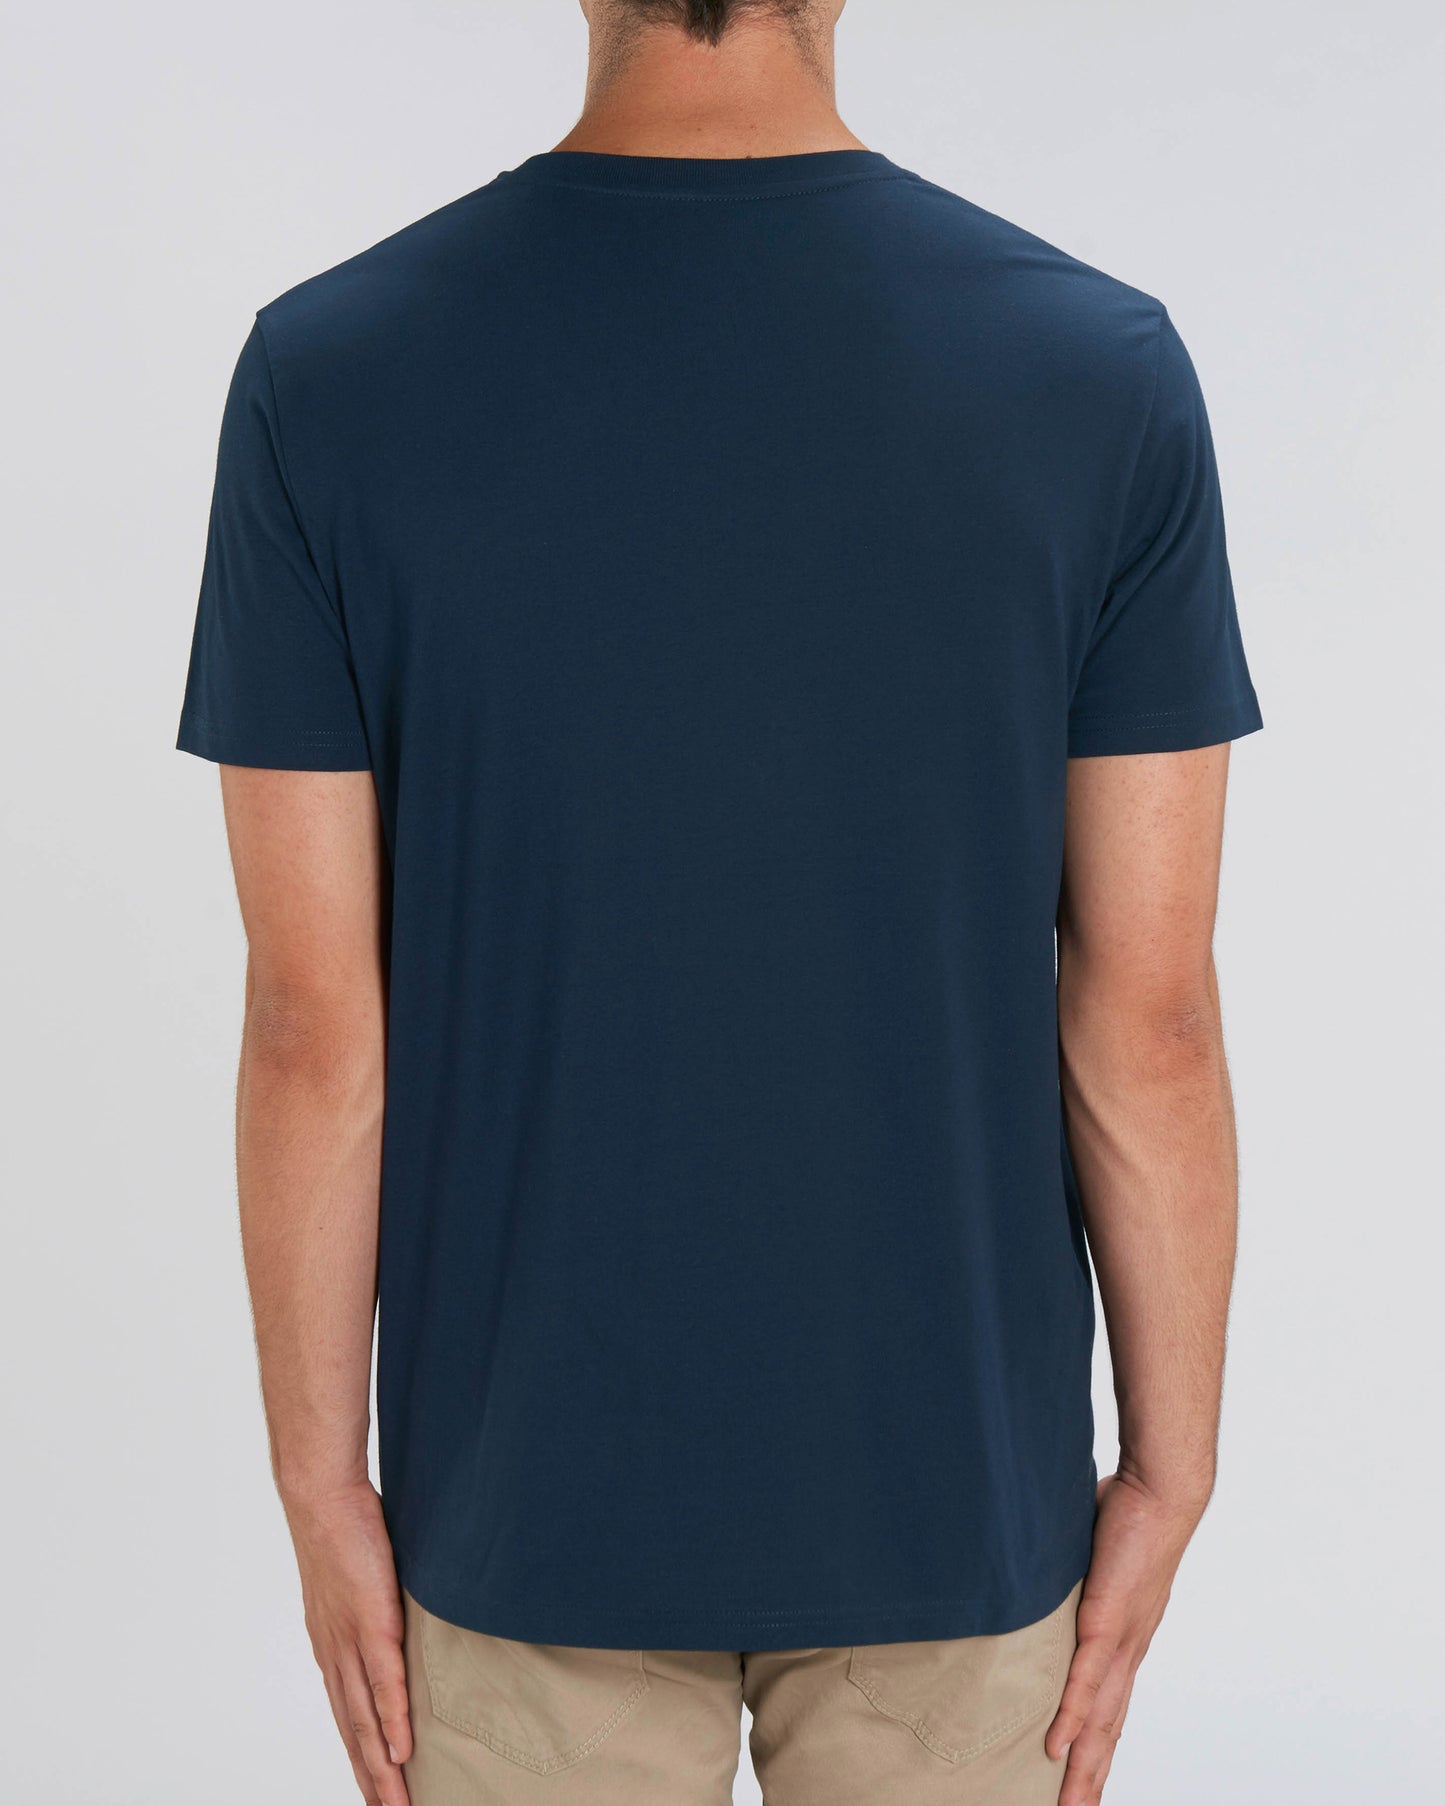 Hang Ten Surfer T-shirt - French Navy